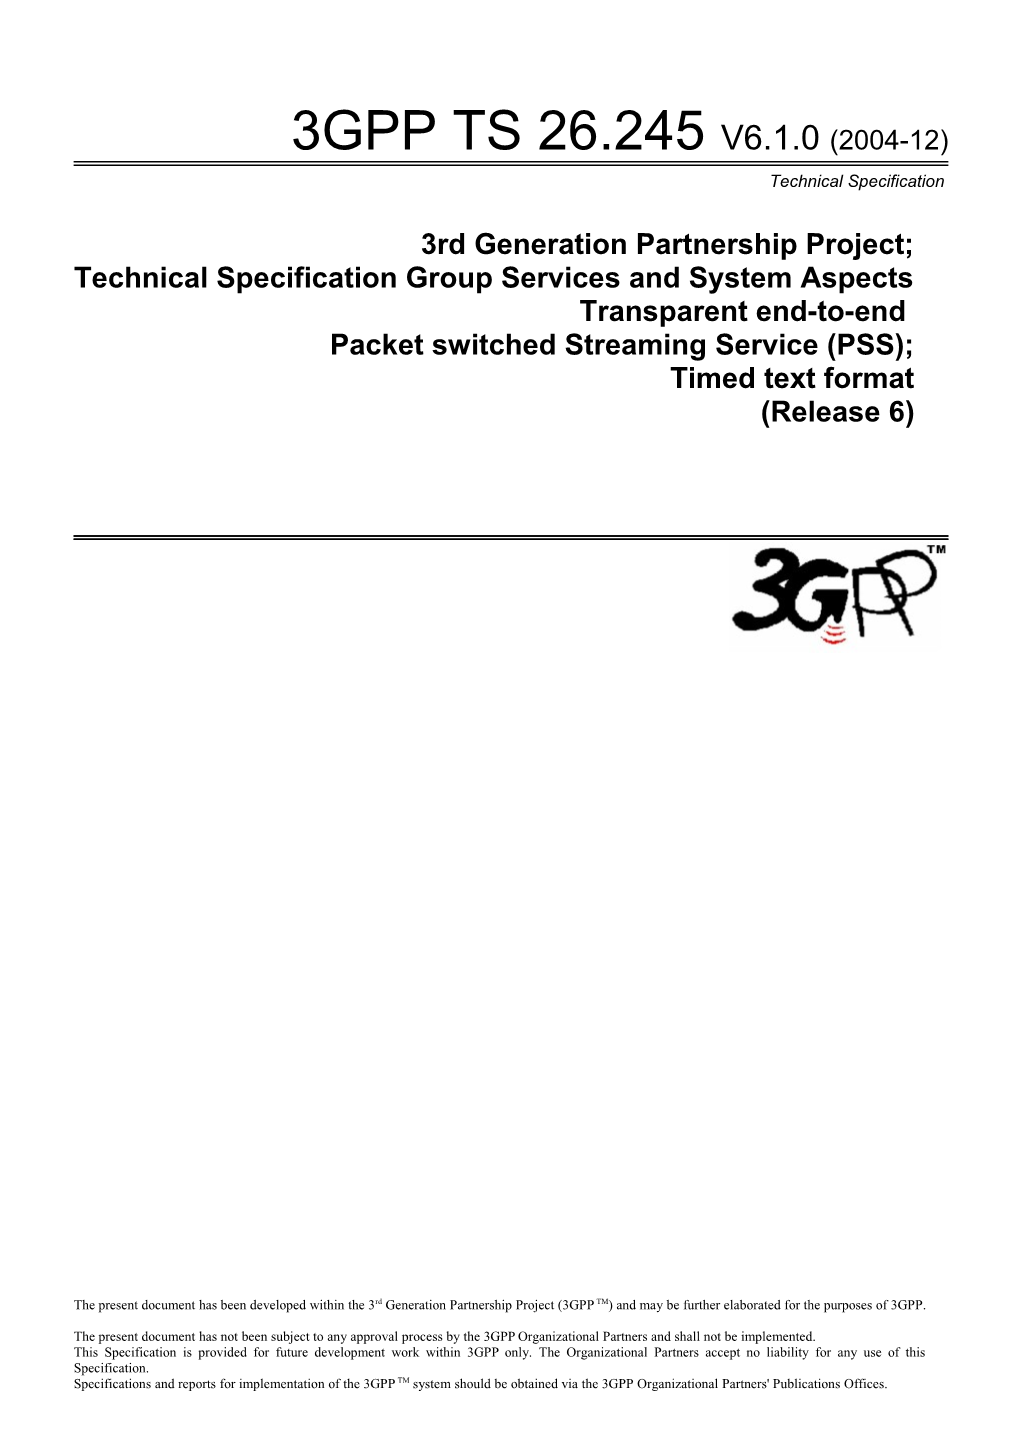 3Rd Generation Partnership Project;